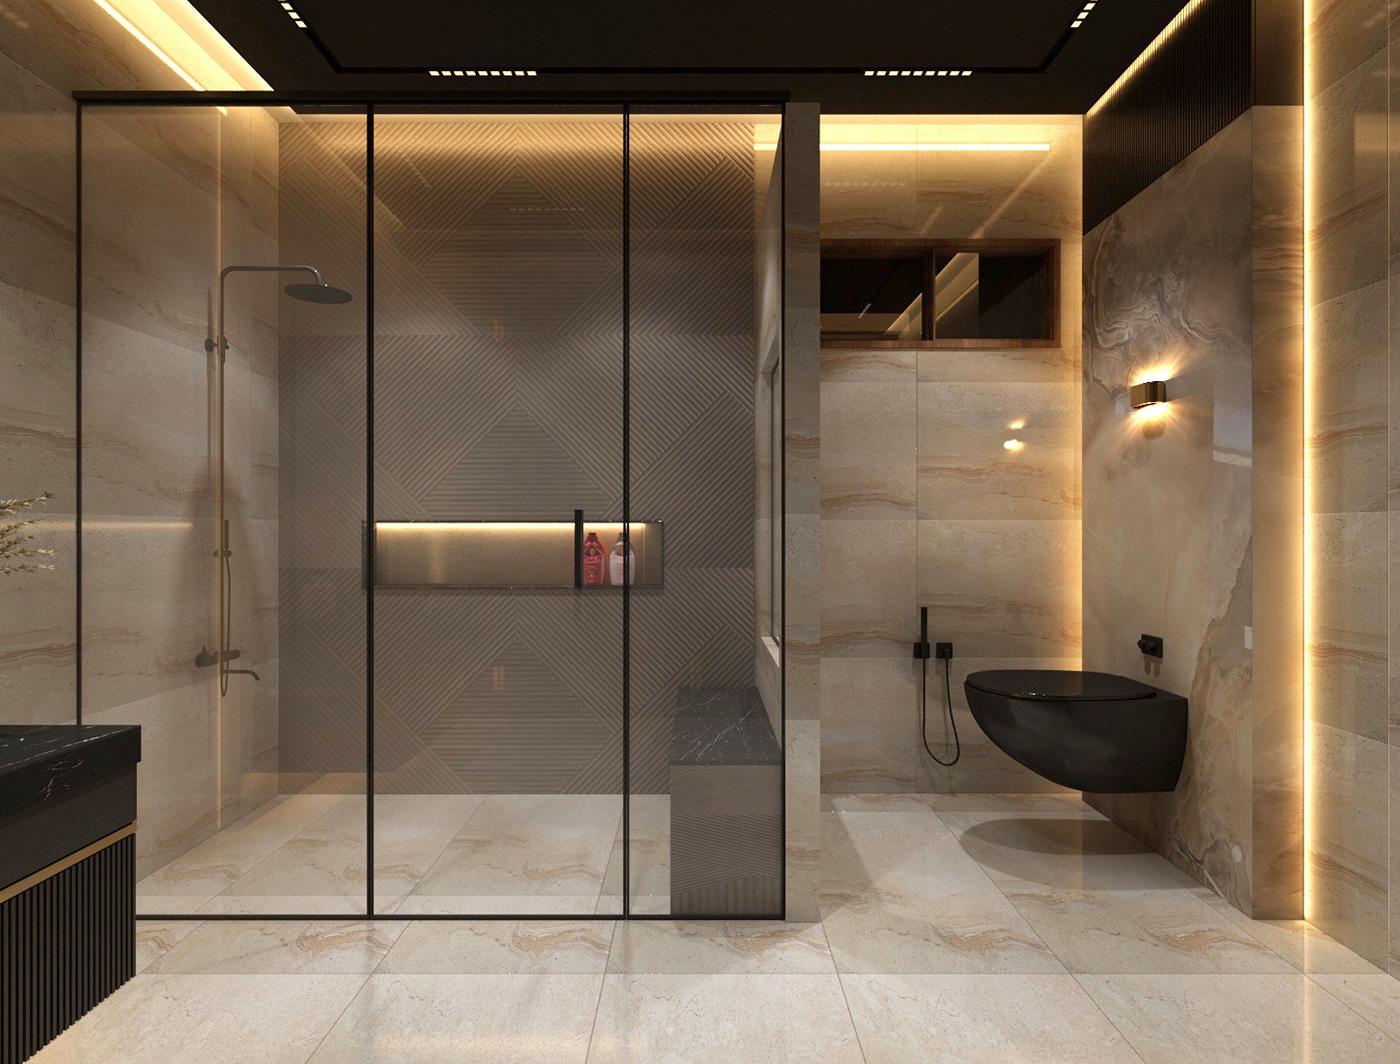 bathroom modern house Interior tiles SHOWER glass vanity banagalow comod